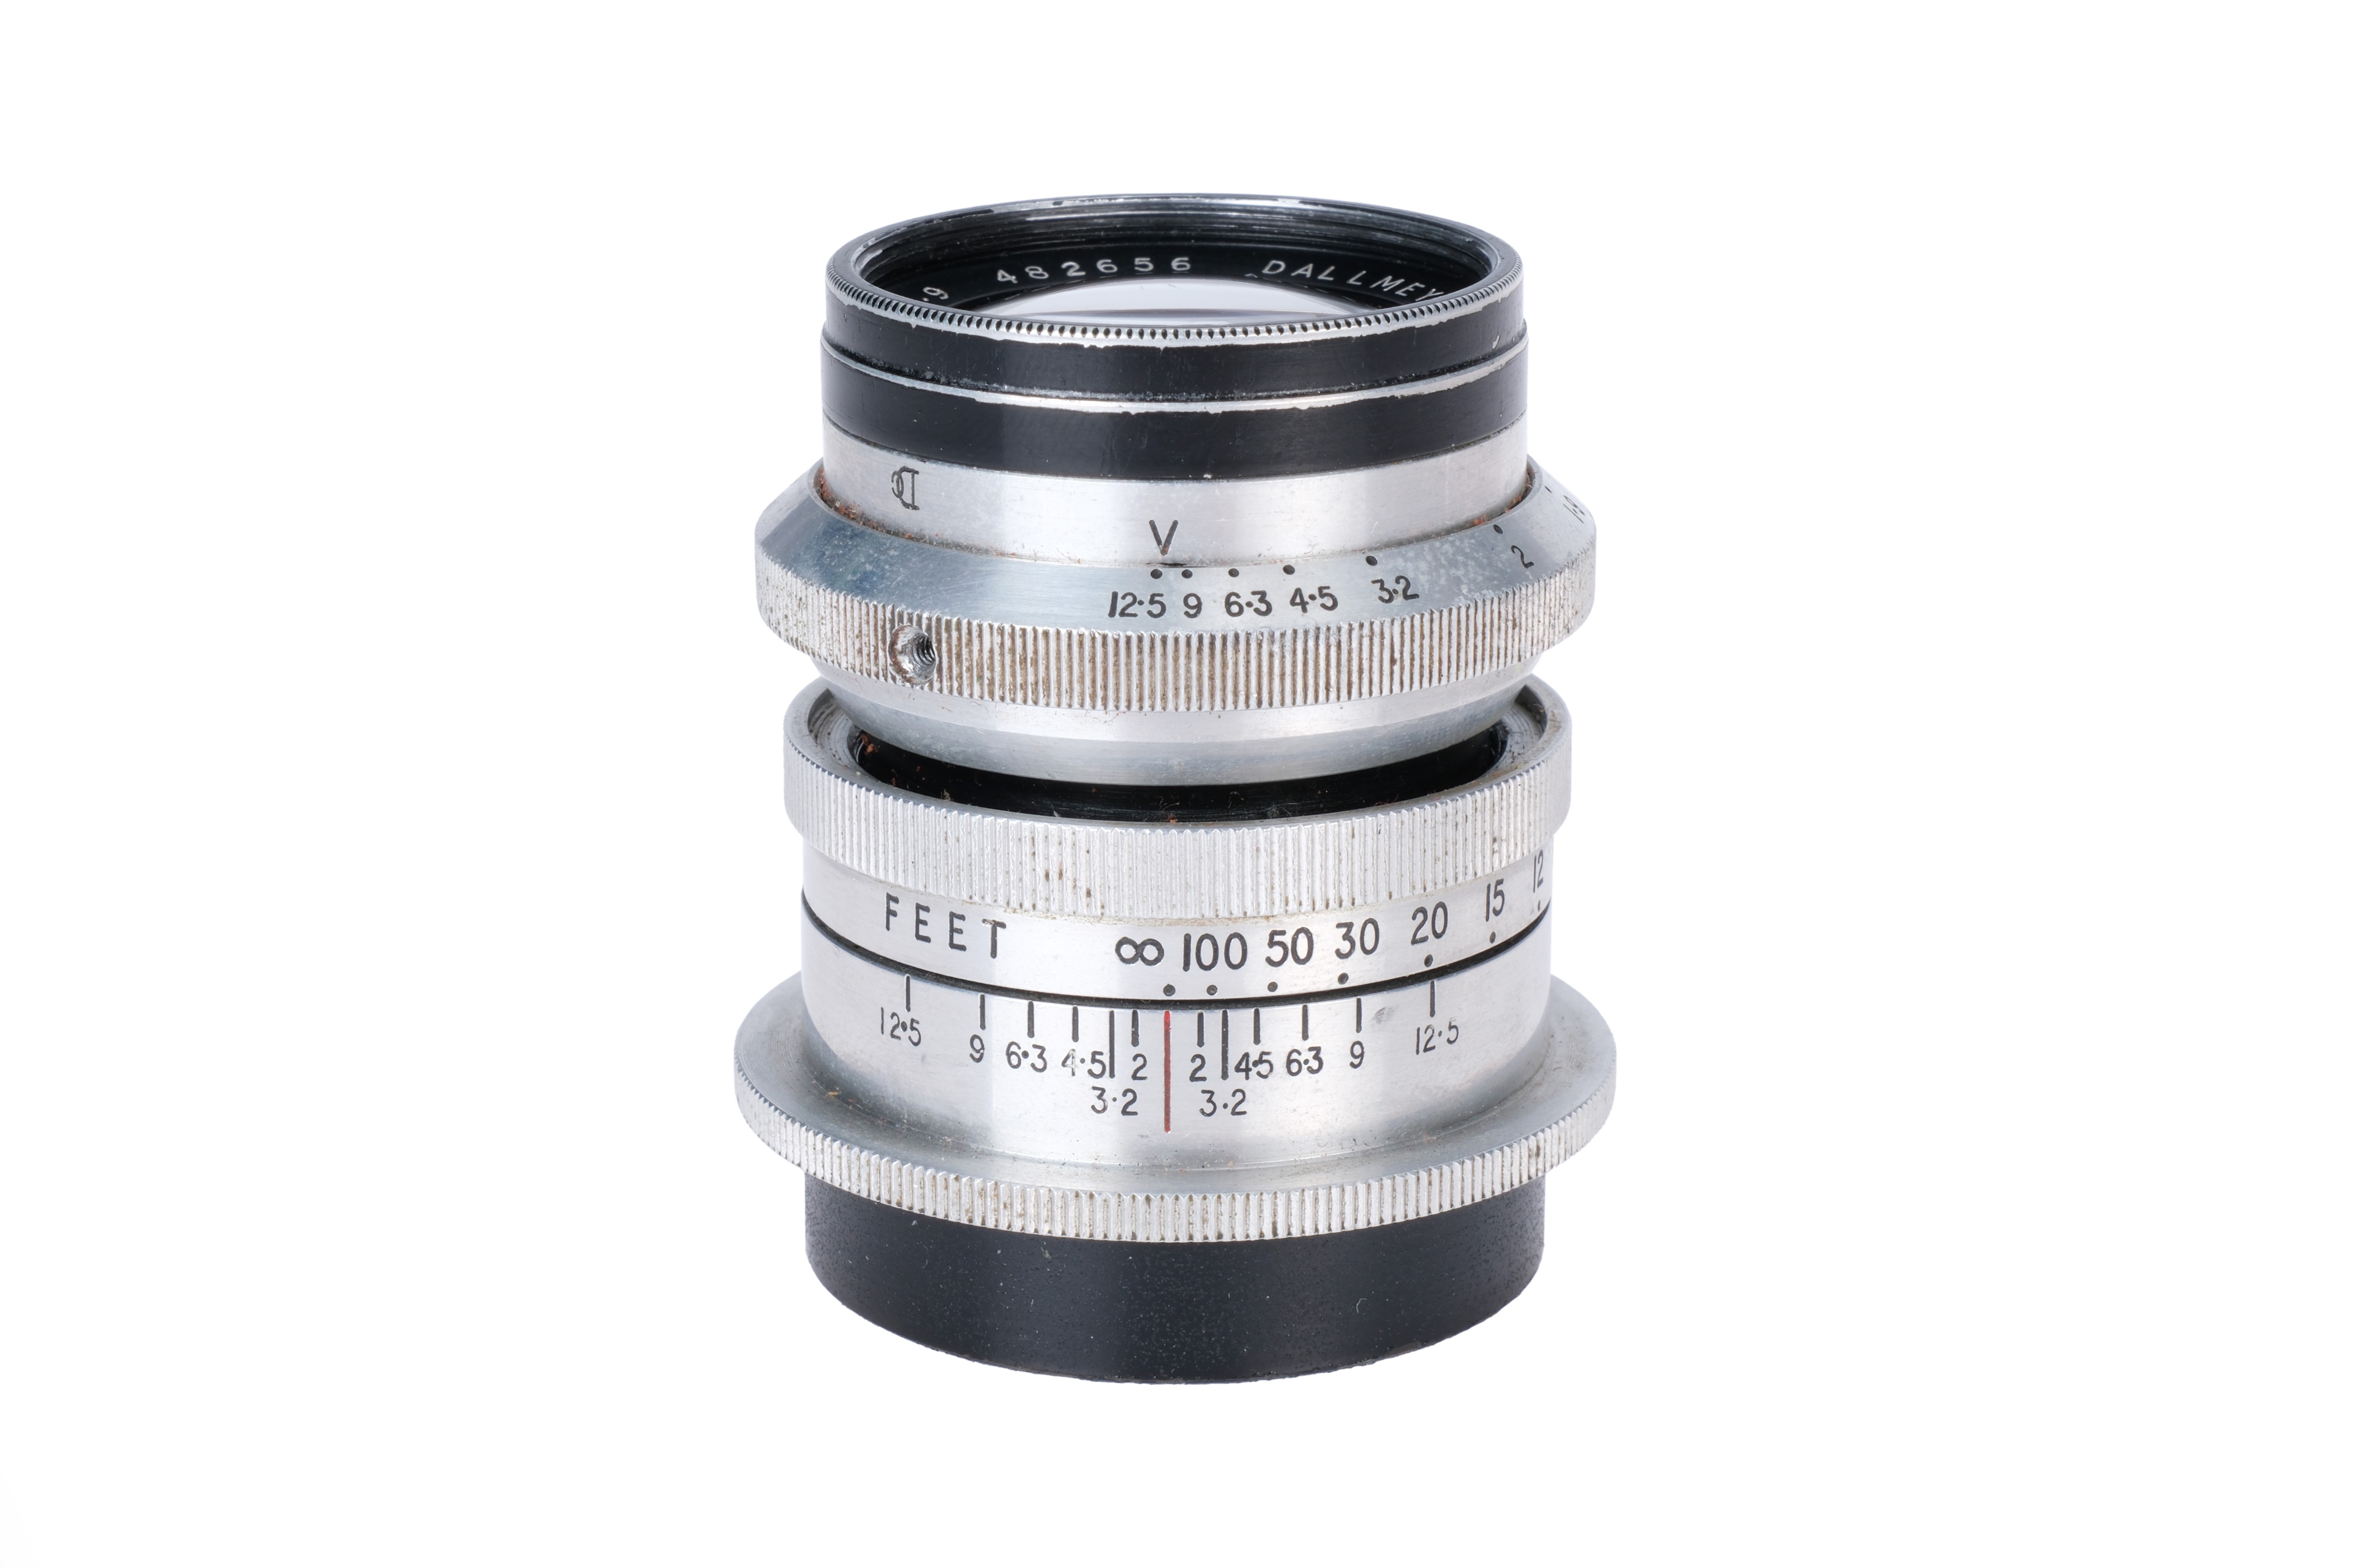 A J. H. Dallmeyer Super Six f/1.9 2" Lens,